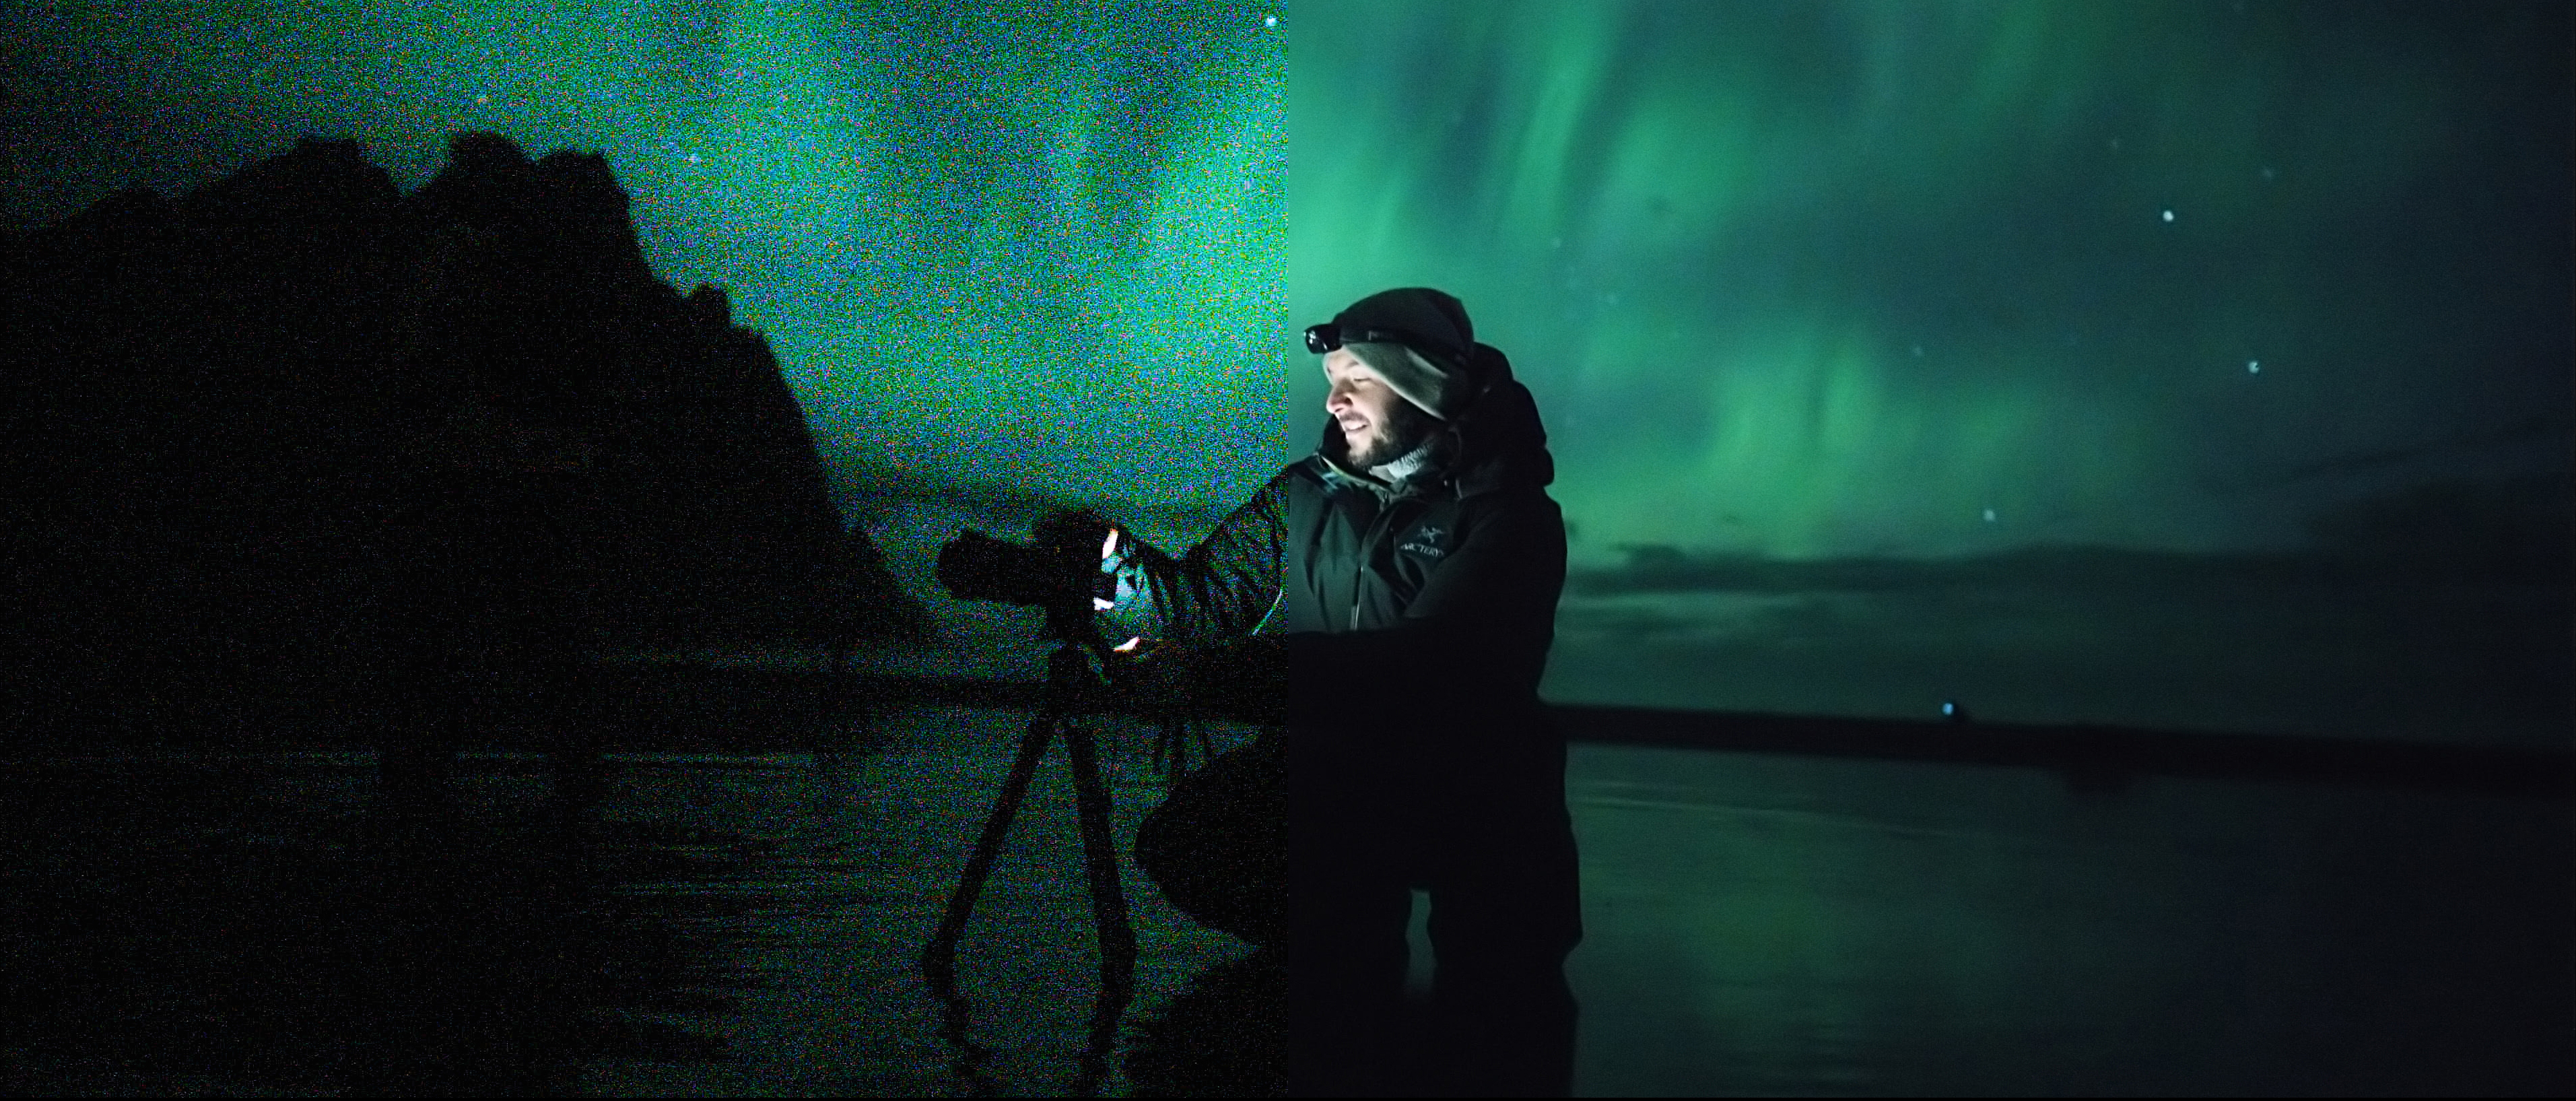 Filming Aurora Borealis in the field